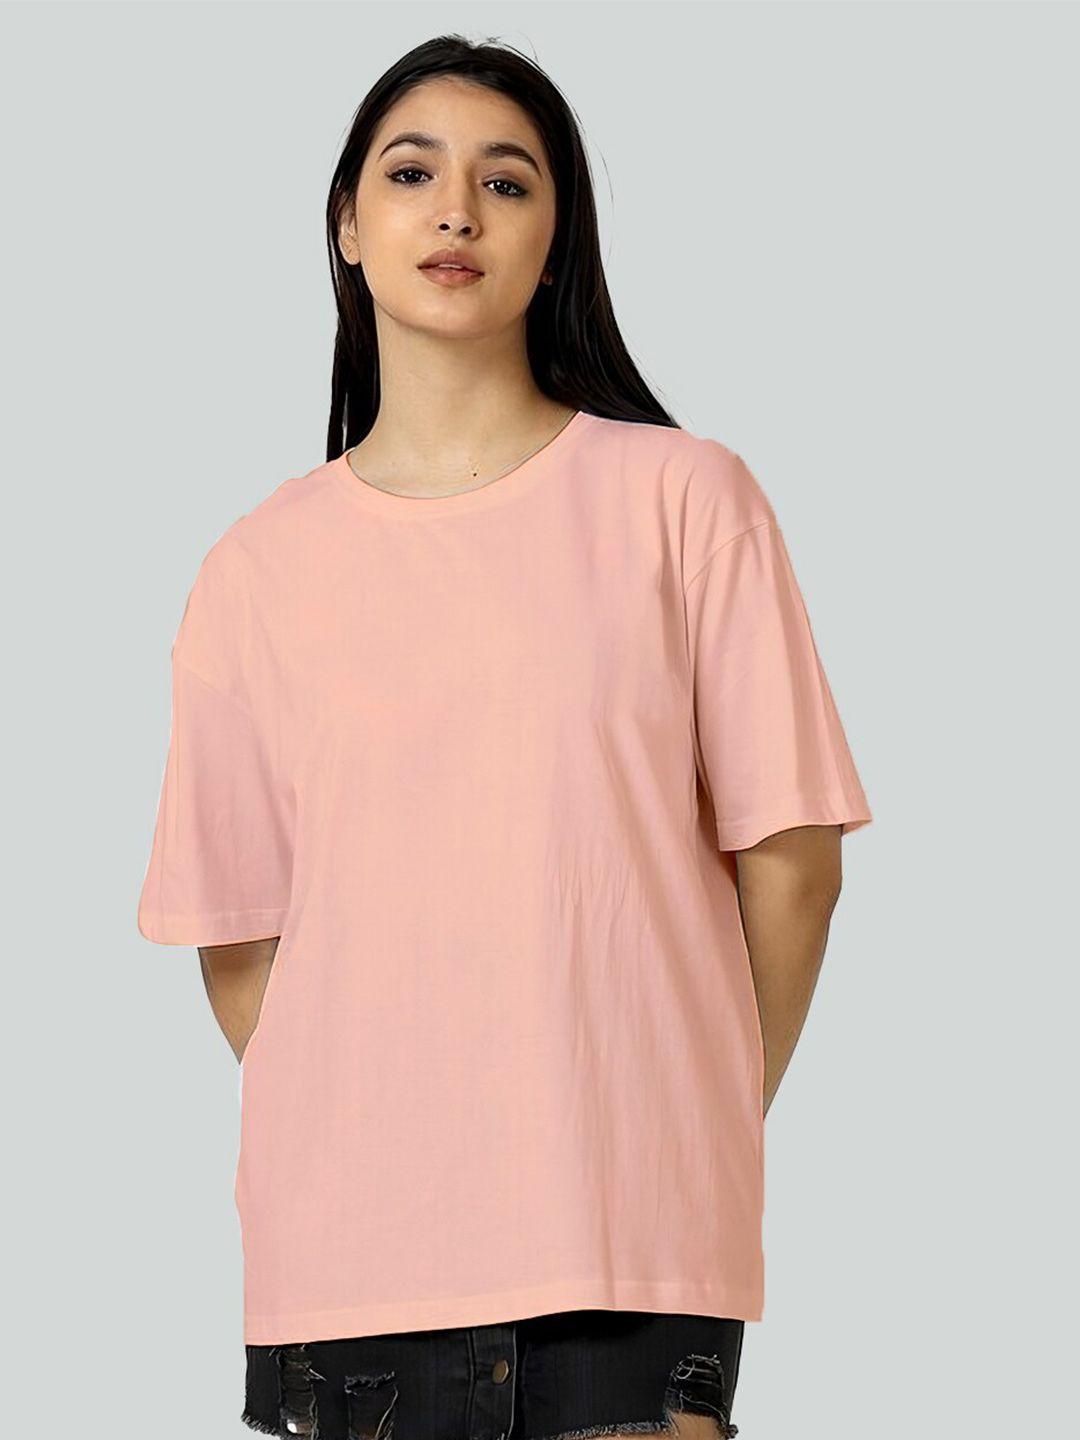 bloopers store women pink printed t-shirt